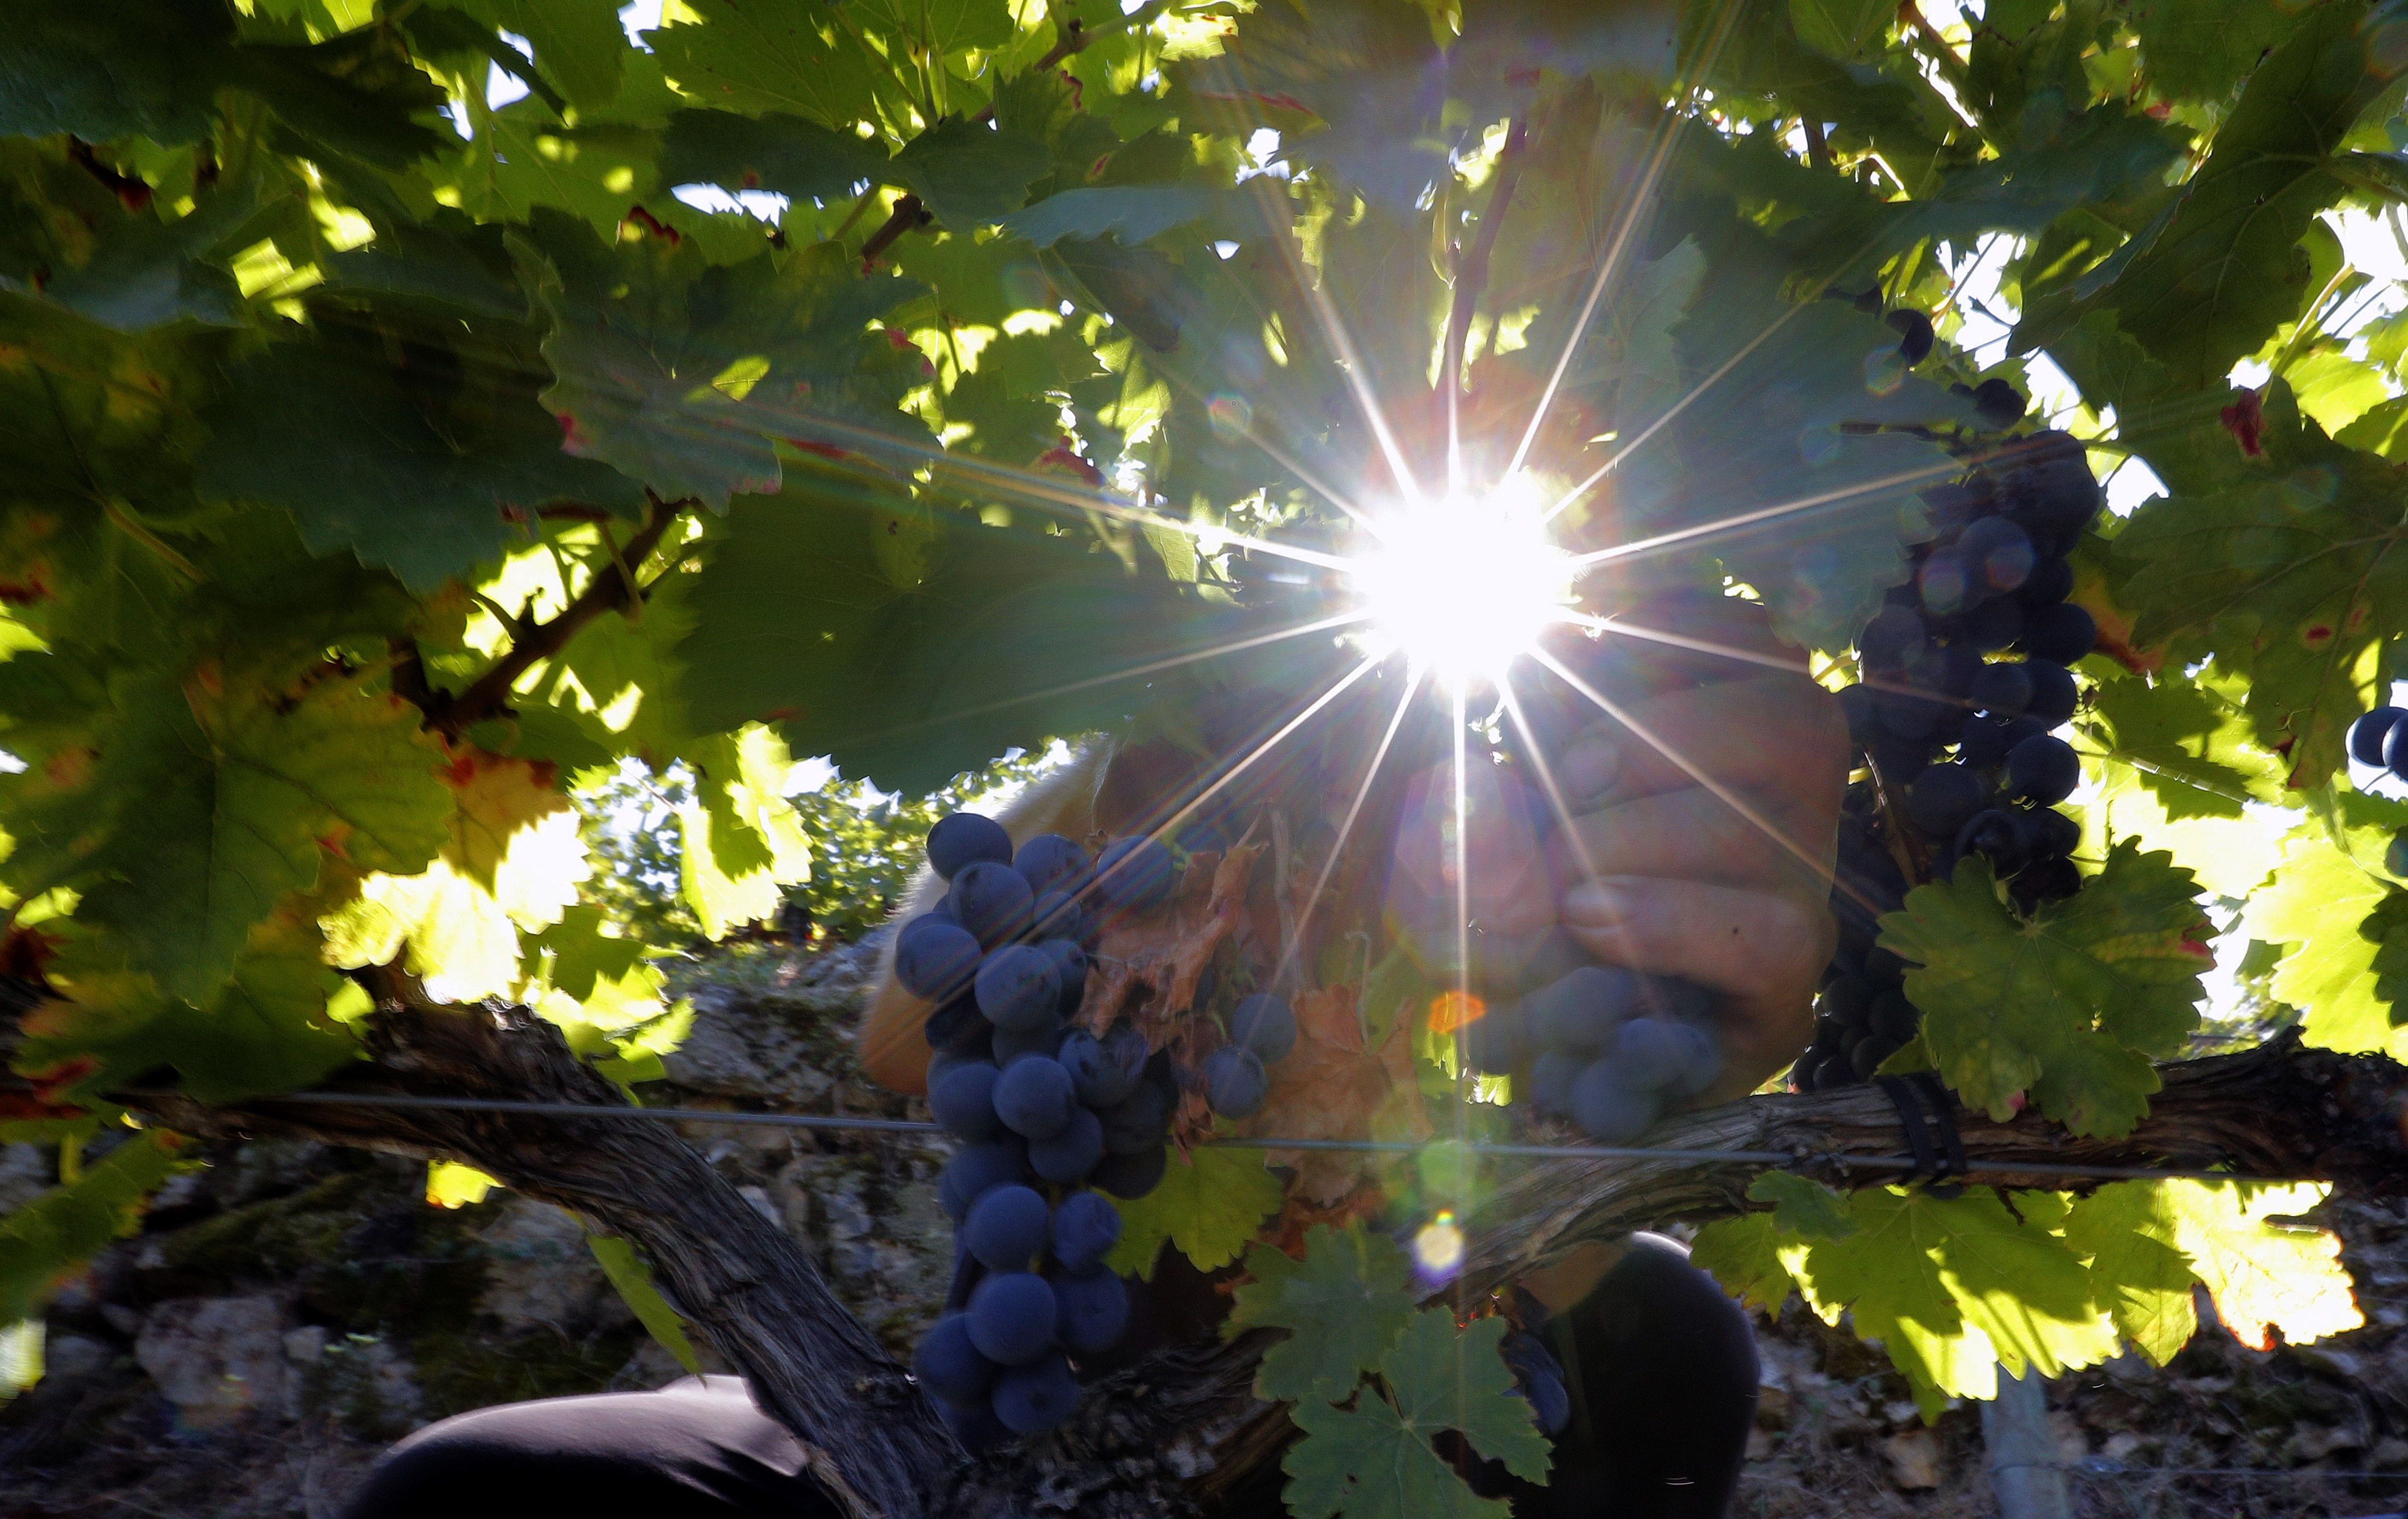 La Ribeira Sacra: Descubriendo una joya de la vitivinicultura española